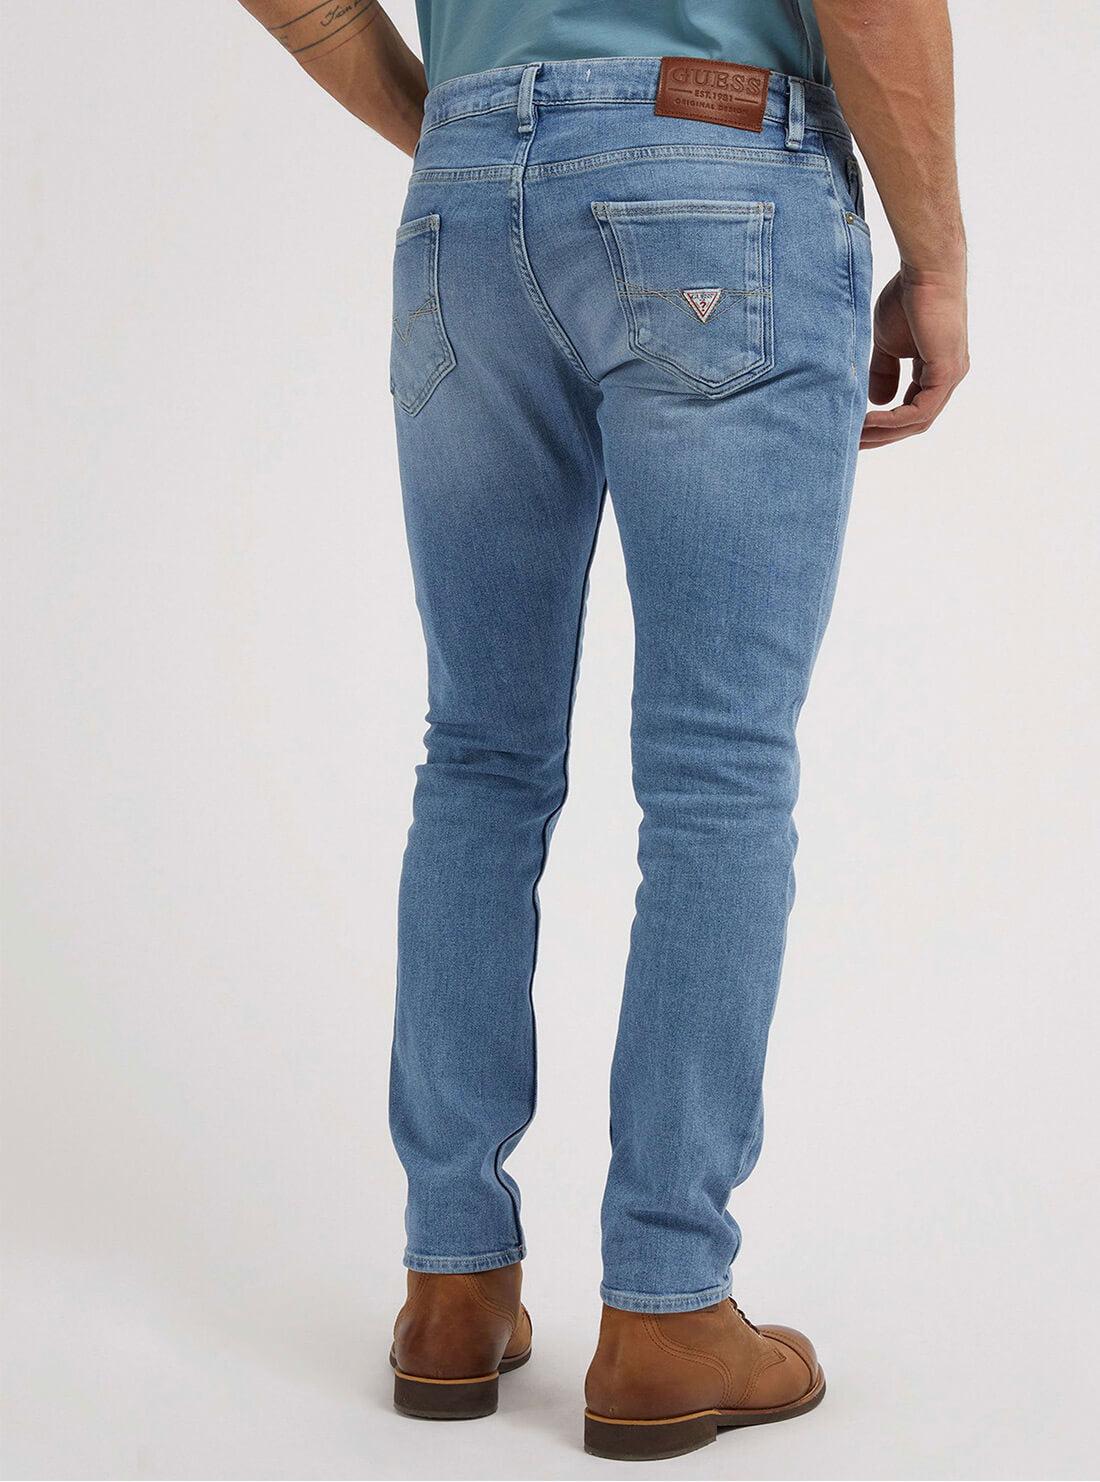 Light Blue Miami Denim Jeans | GUESS men's apparel | back view